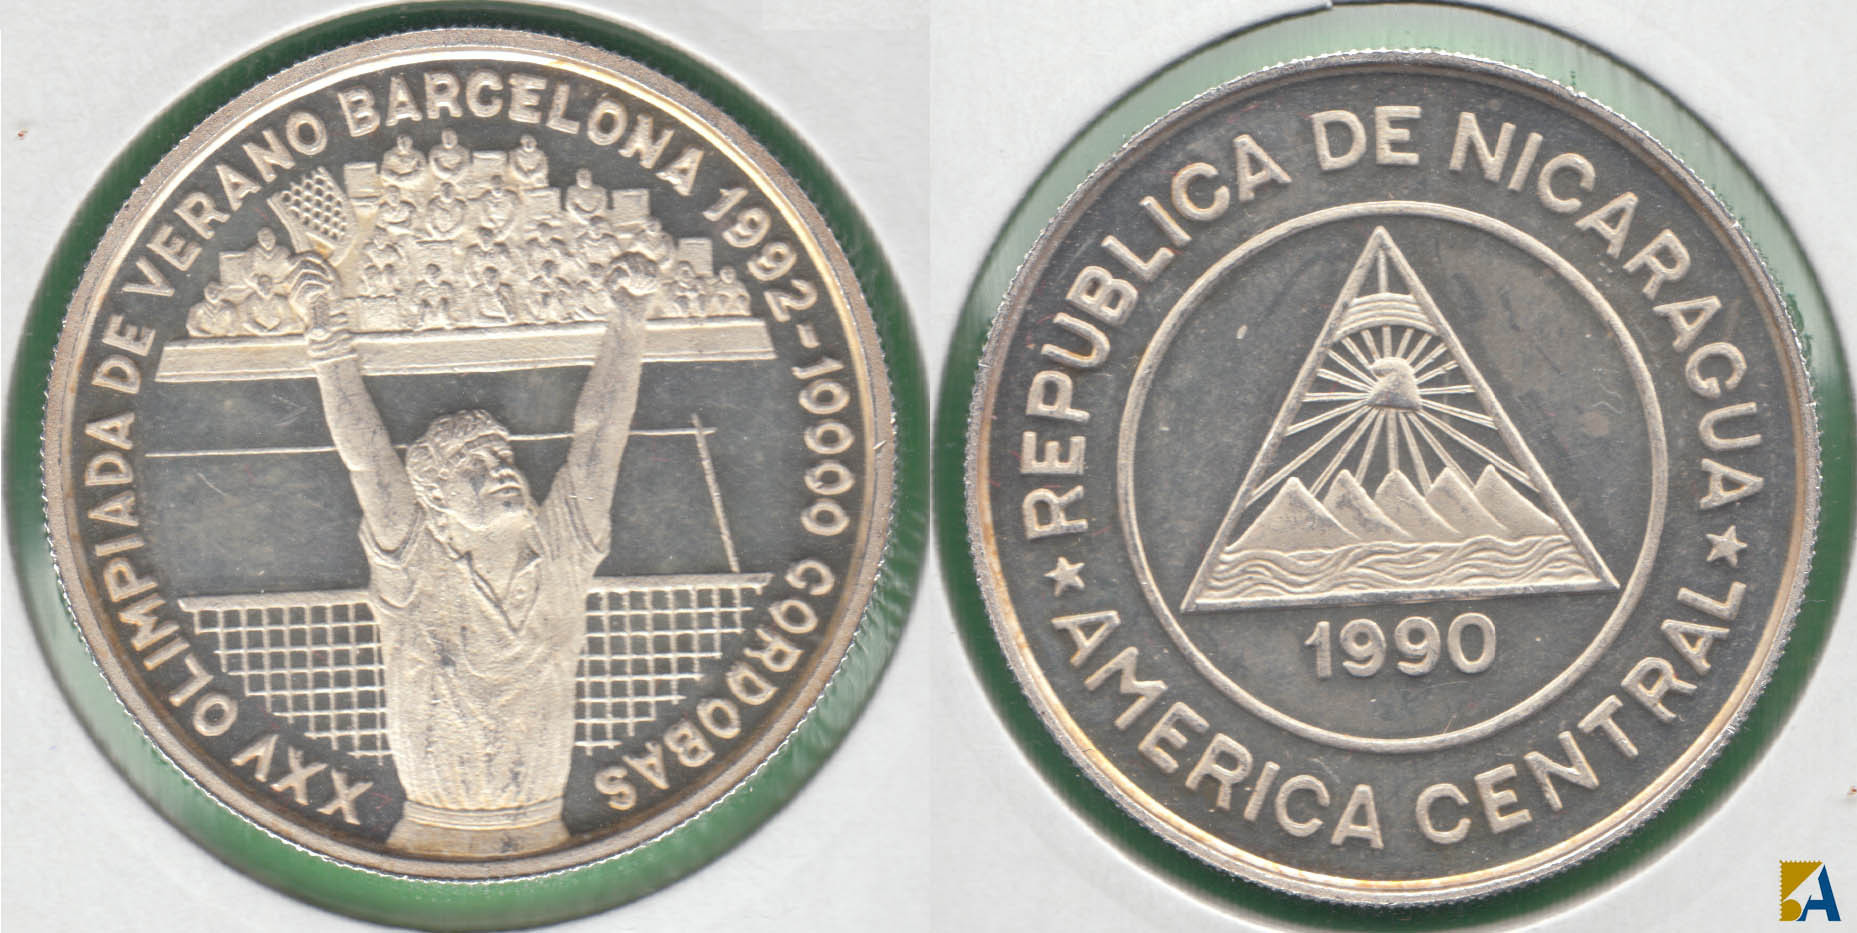 NICARAGUA. 10000 CORDOBAS DE 1990. PLATA 0.9990. PROOF.